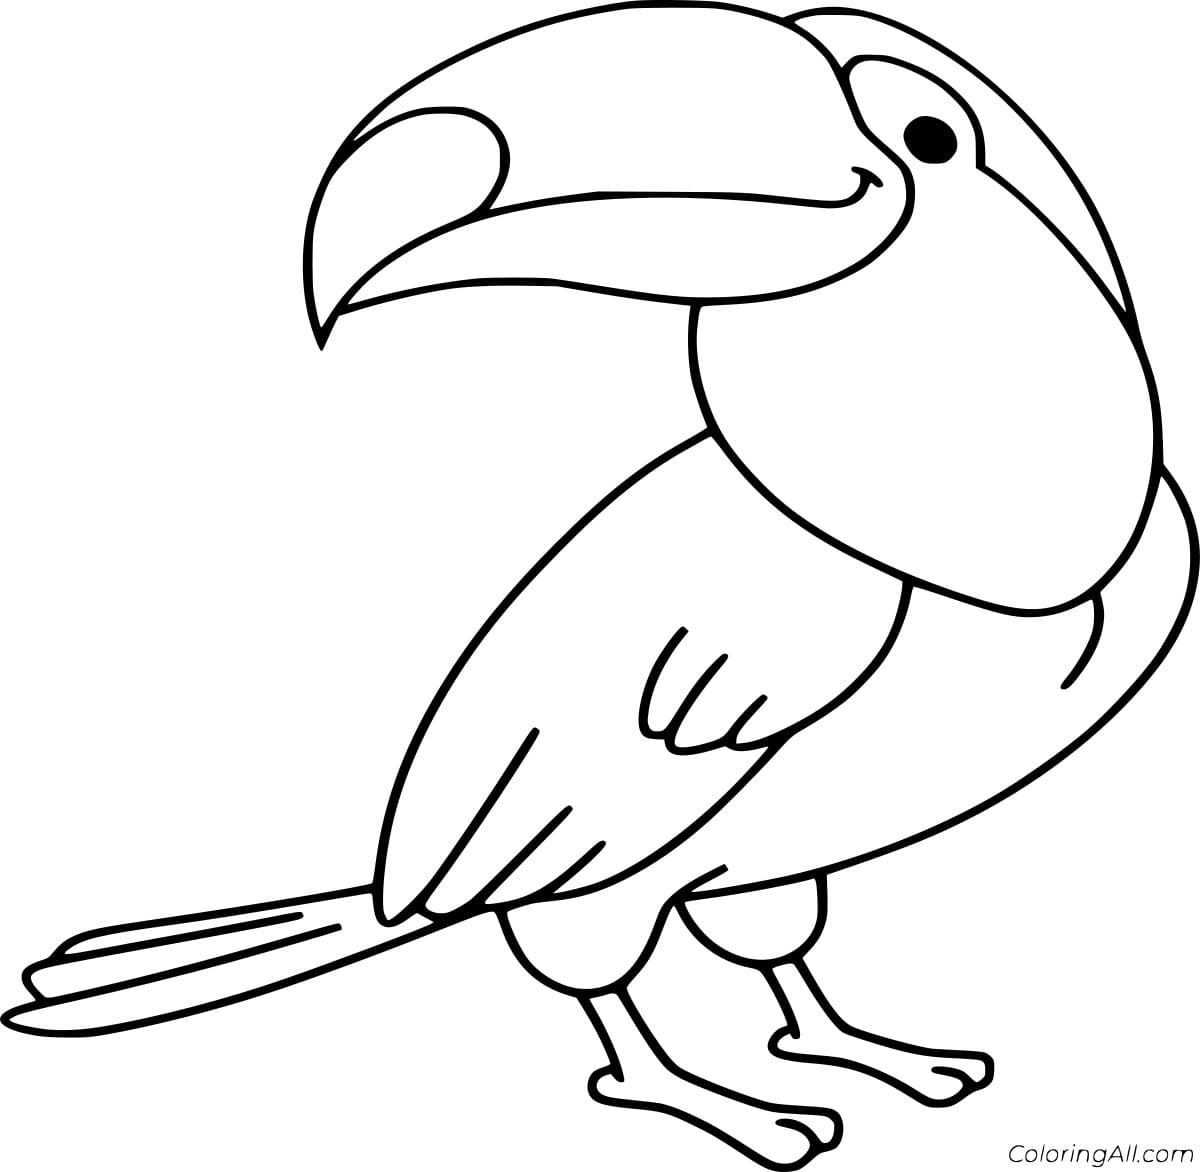 Easy Toucan Image